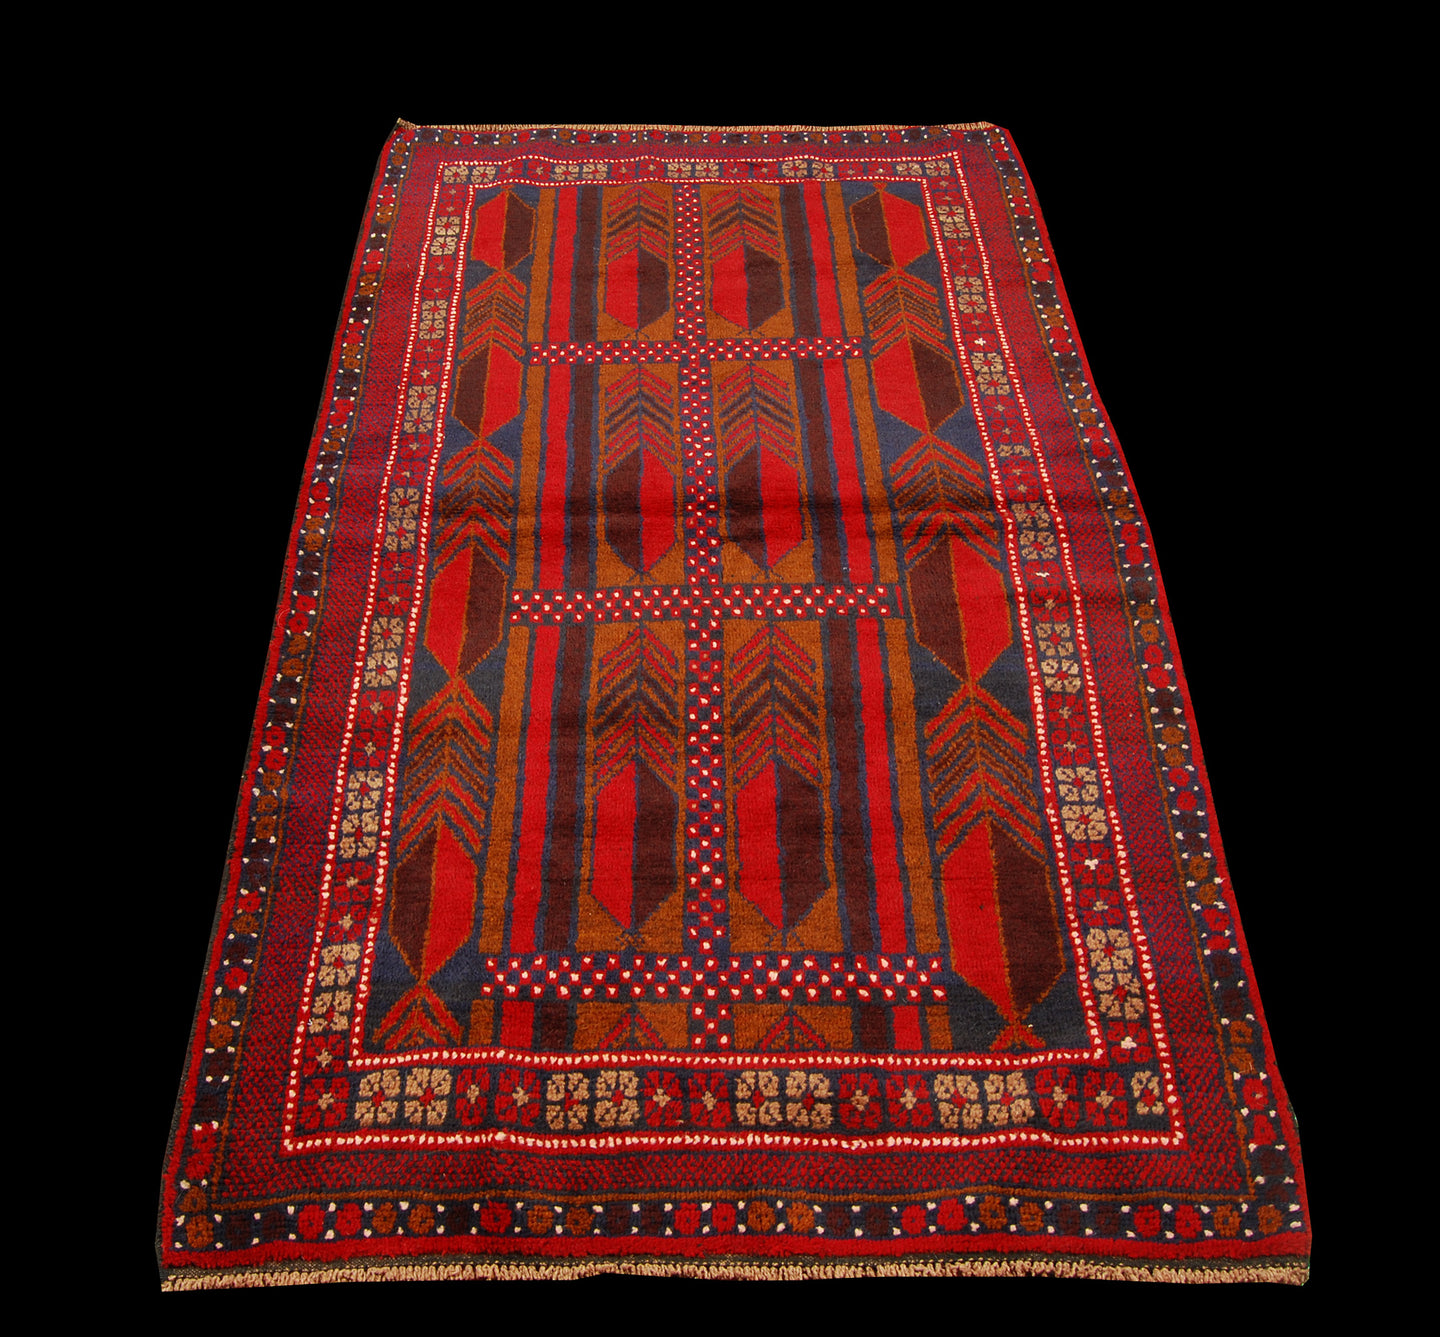 Genuine, Original Pure Wool Rug Rustic Handmad Carpet CM 190x100